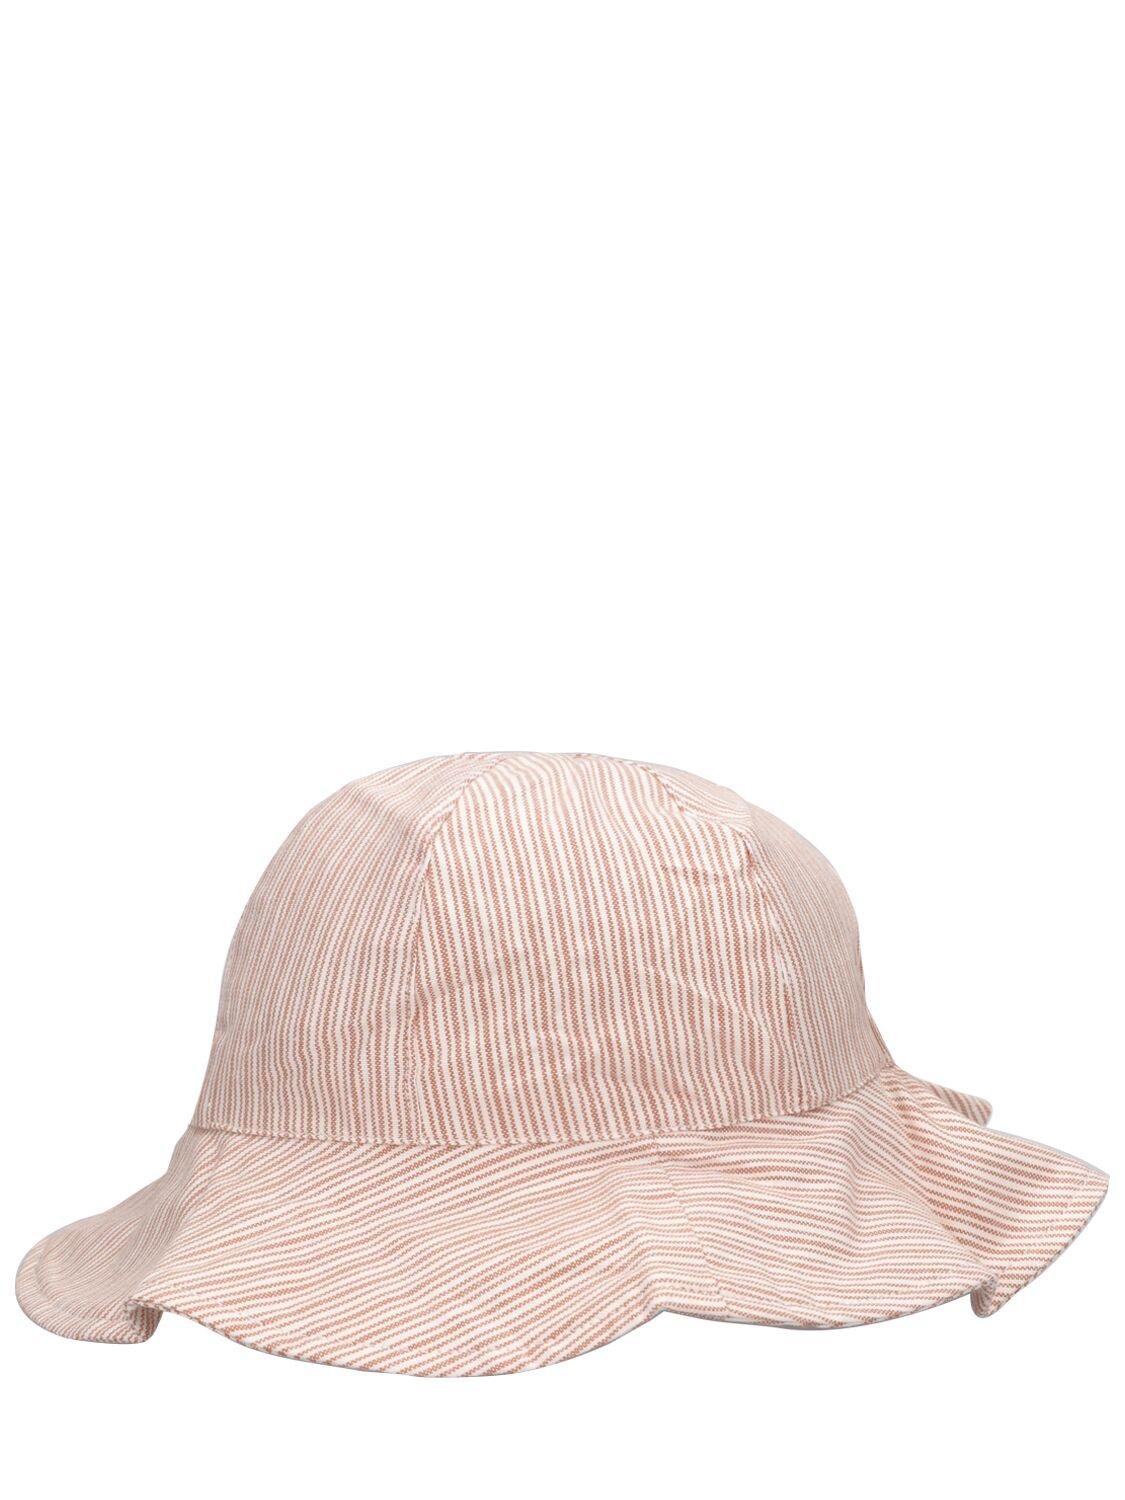 Striped Organic Cotton Sun Hat by LIEWOOD